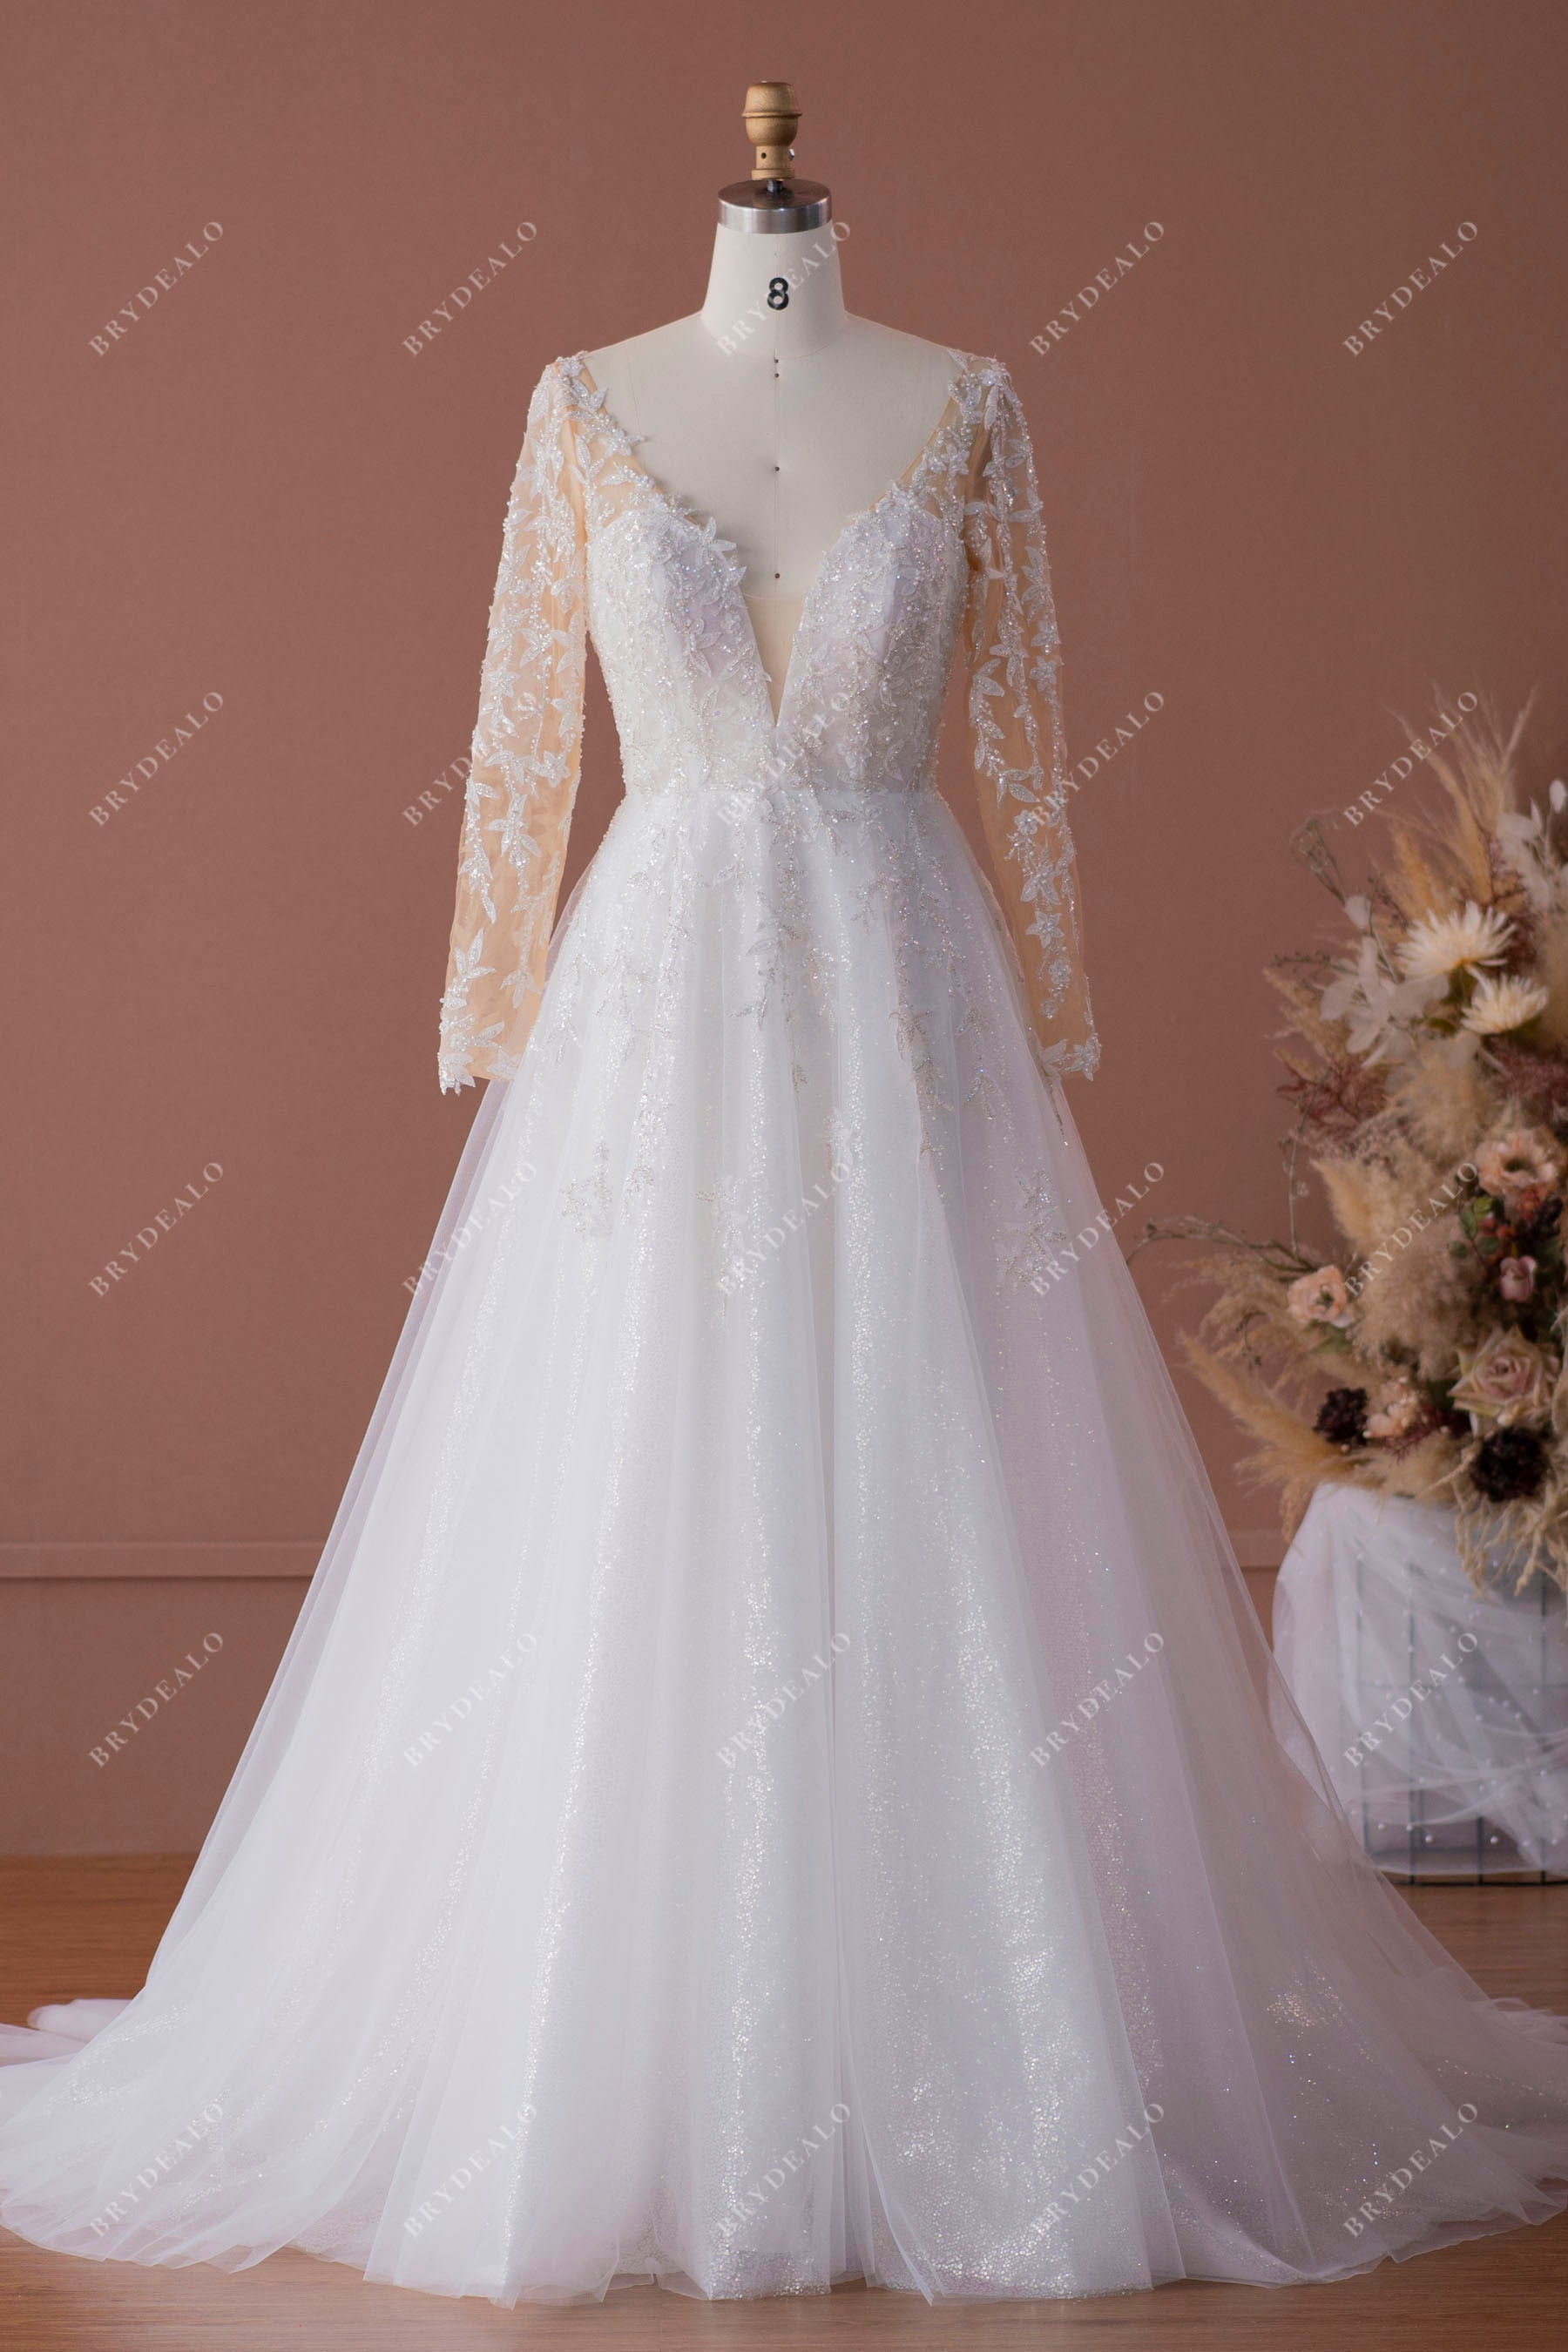 shimmery v-neck long sleeve wedding dress